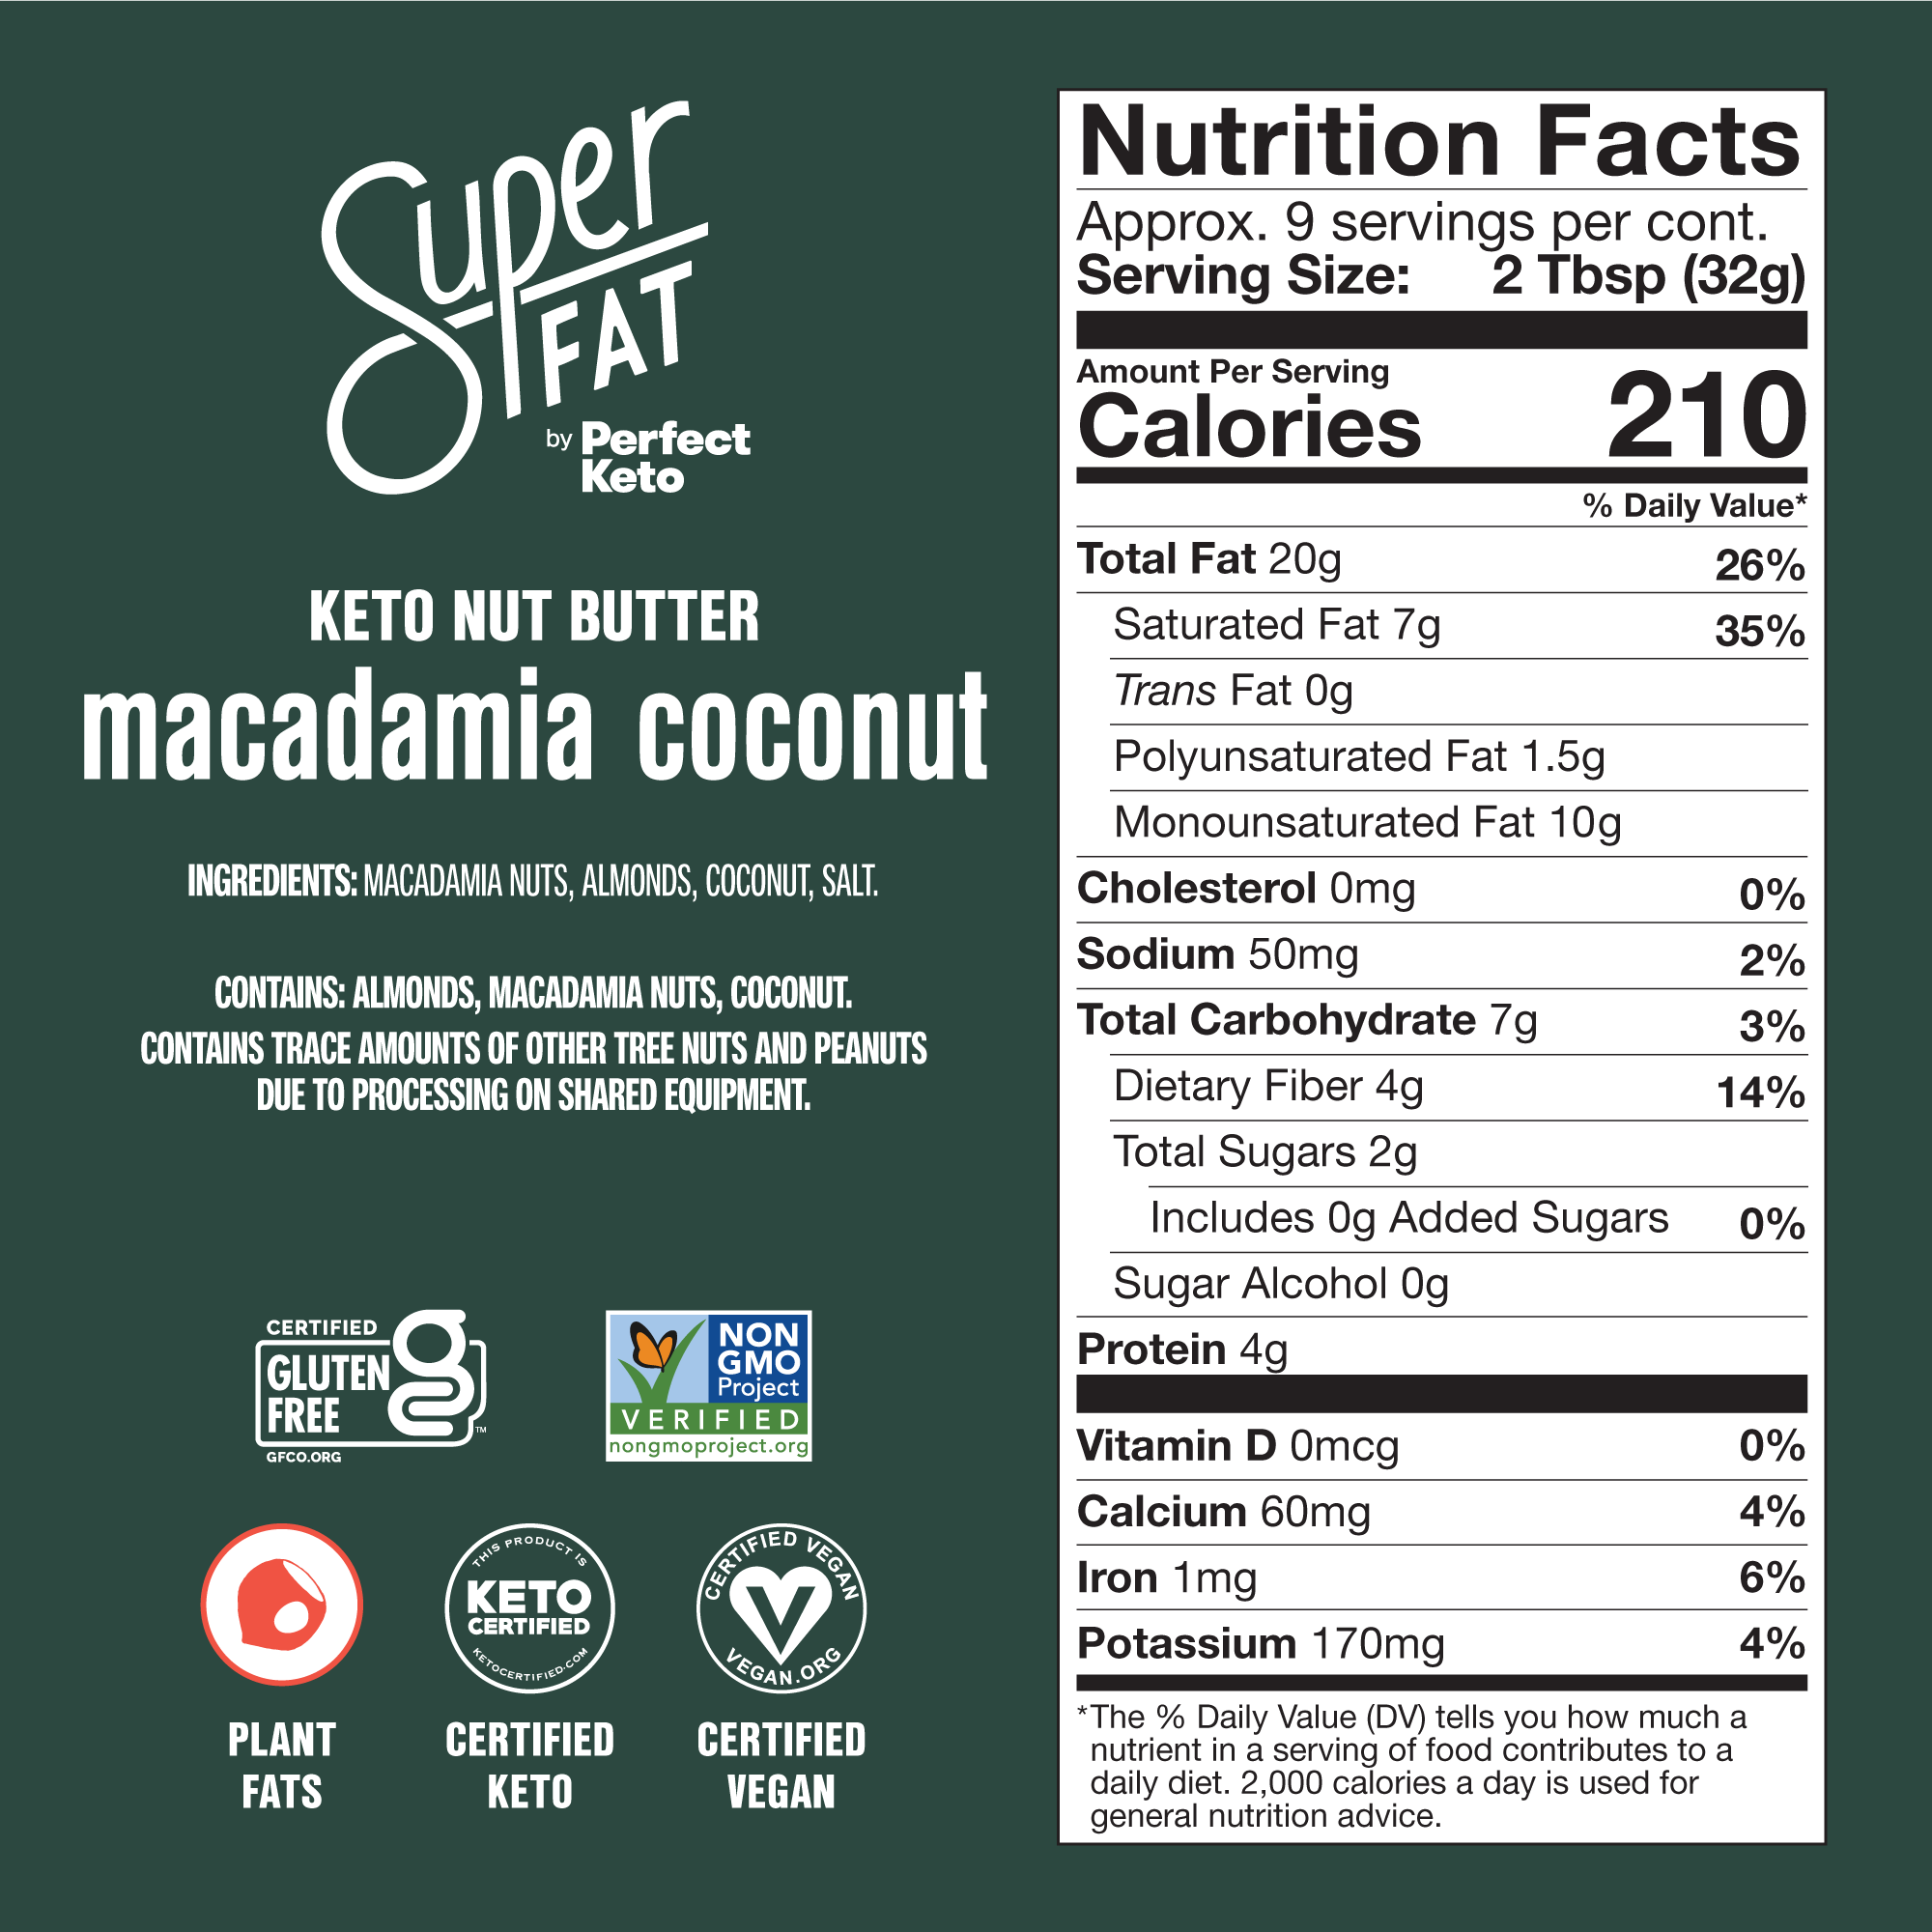 SuperFat Keto Nut Butter Jars - 10 oz